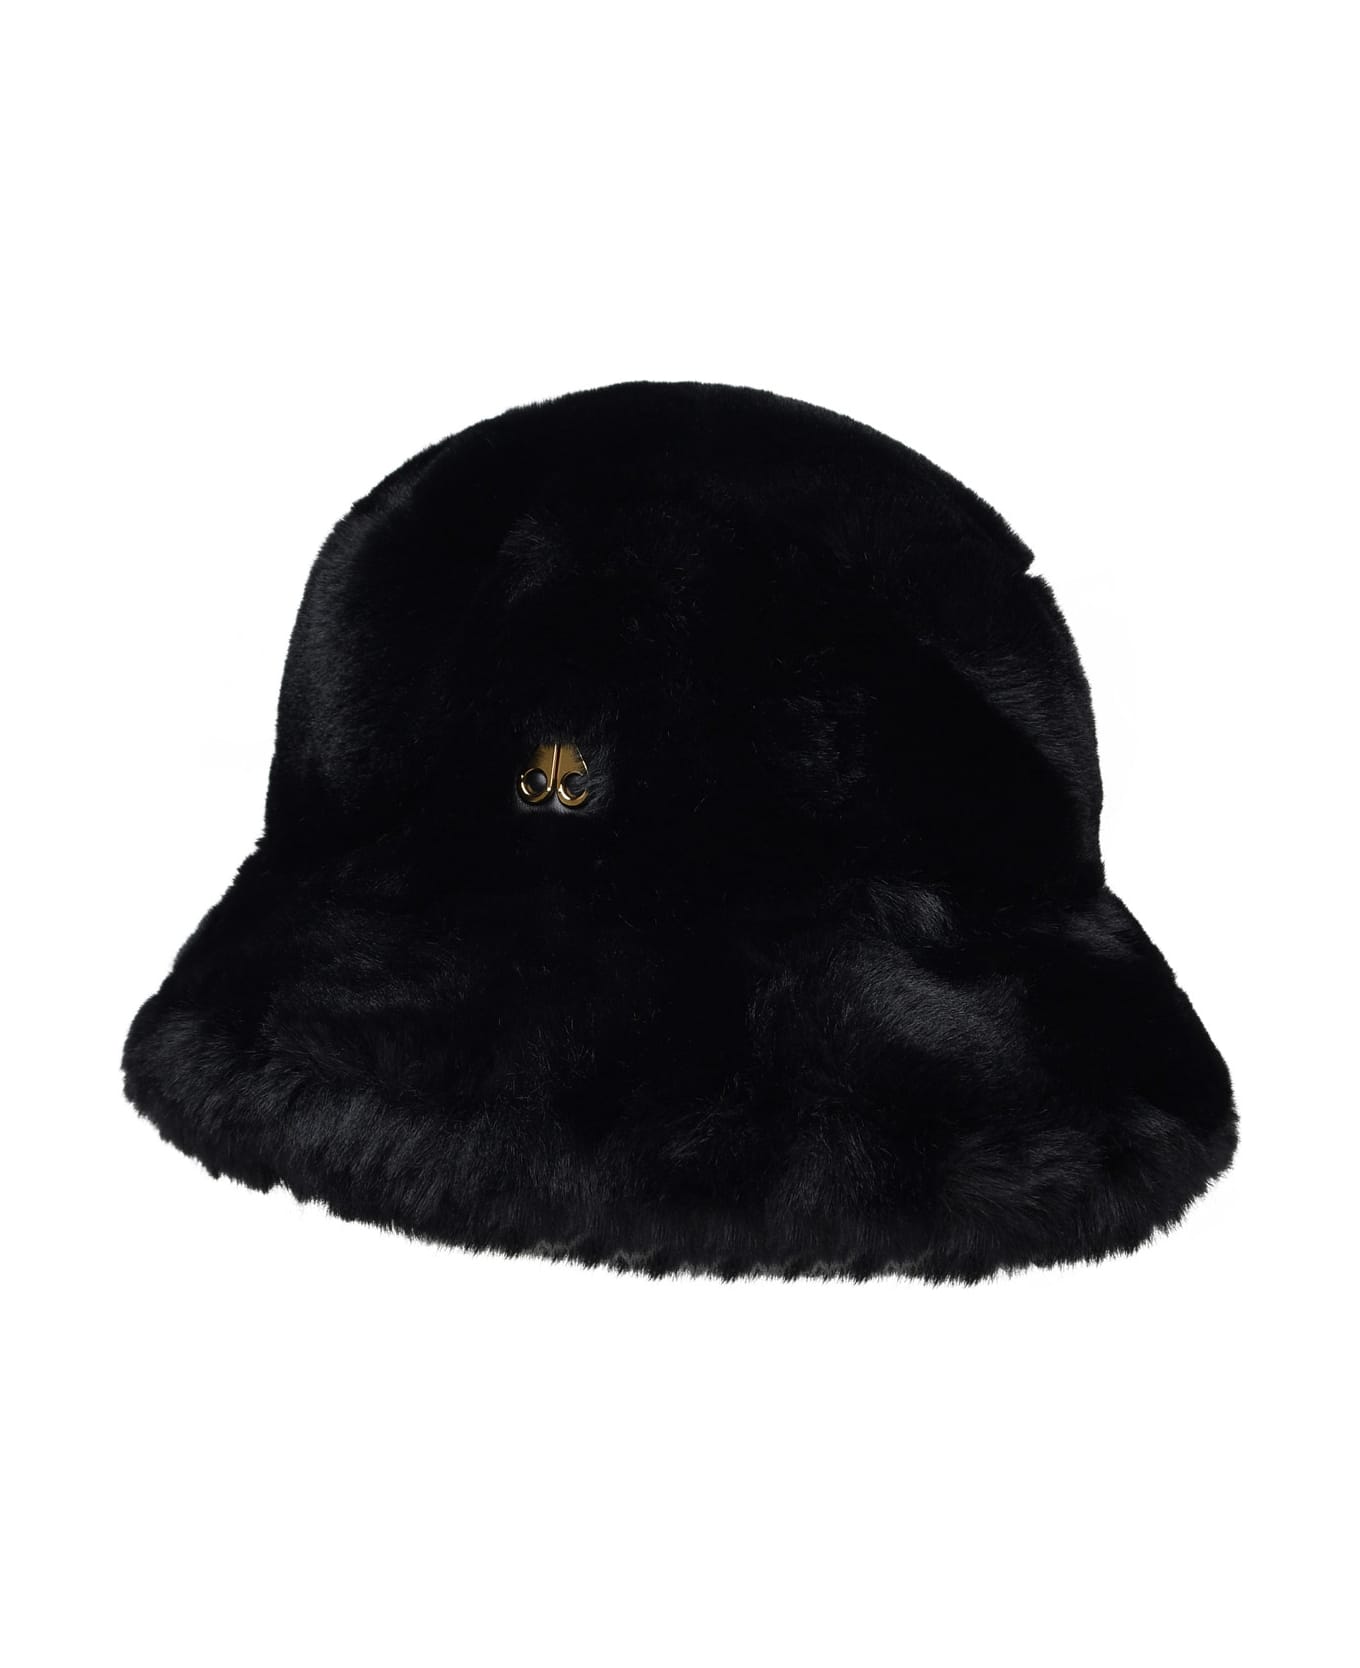 Moose Knuckles Sackett Black Polyester Hat - Black